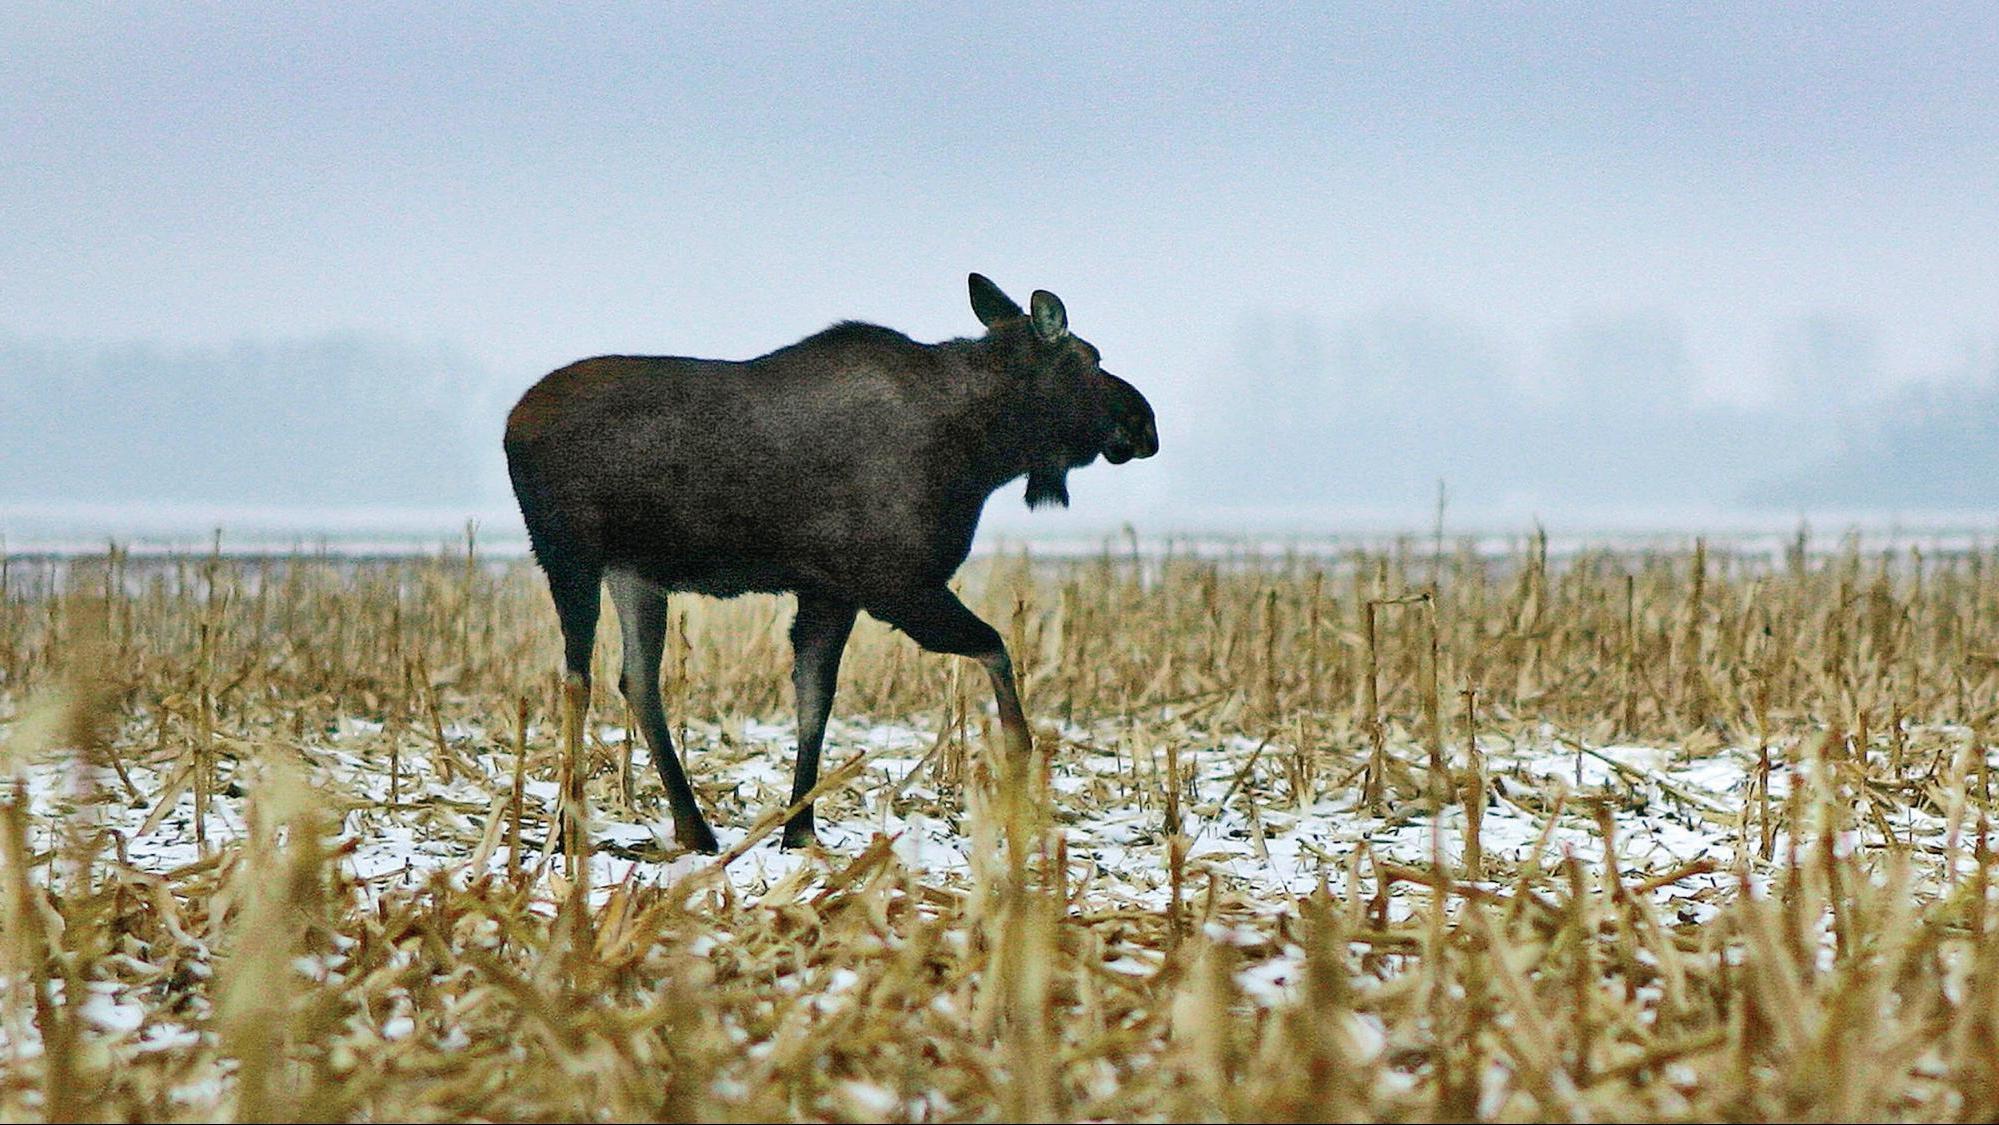 Moose walking through a field on a foggy winter day